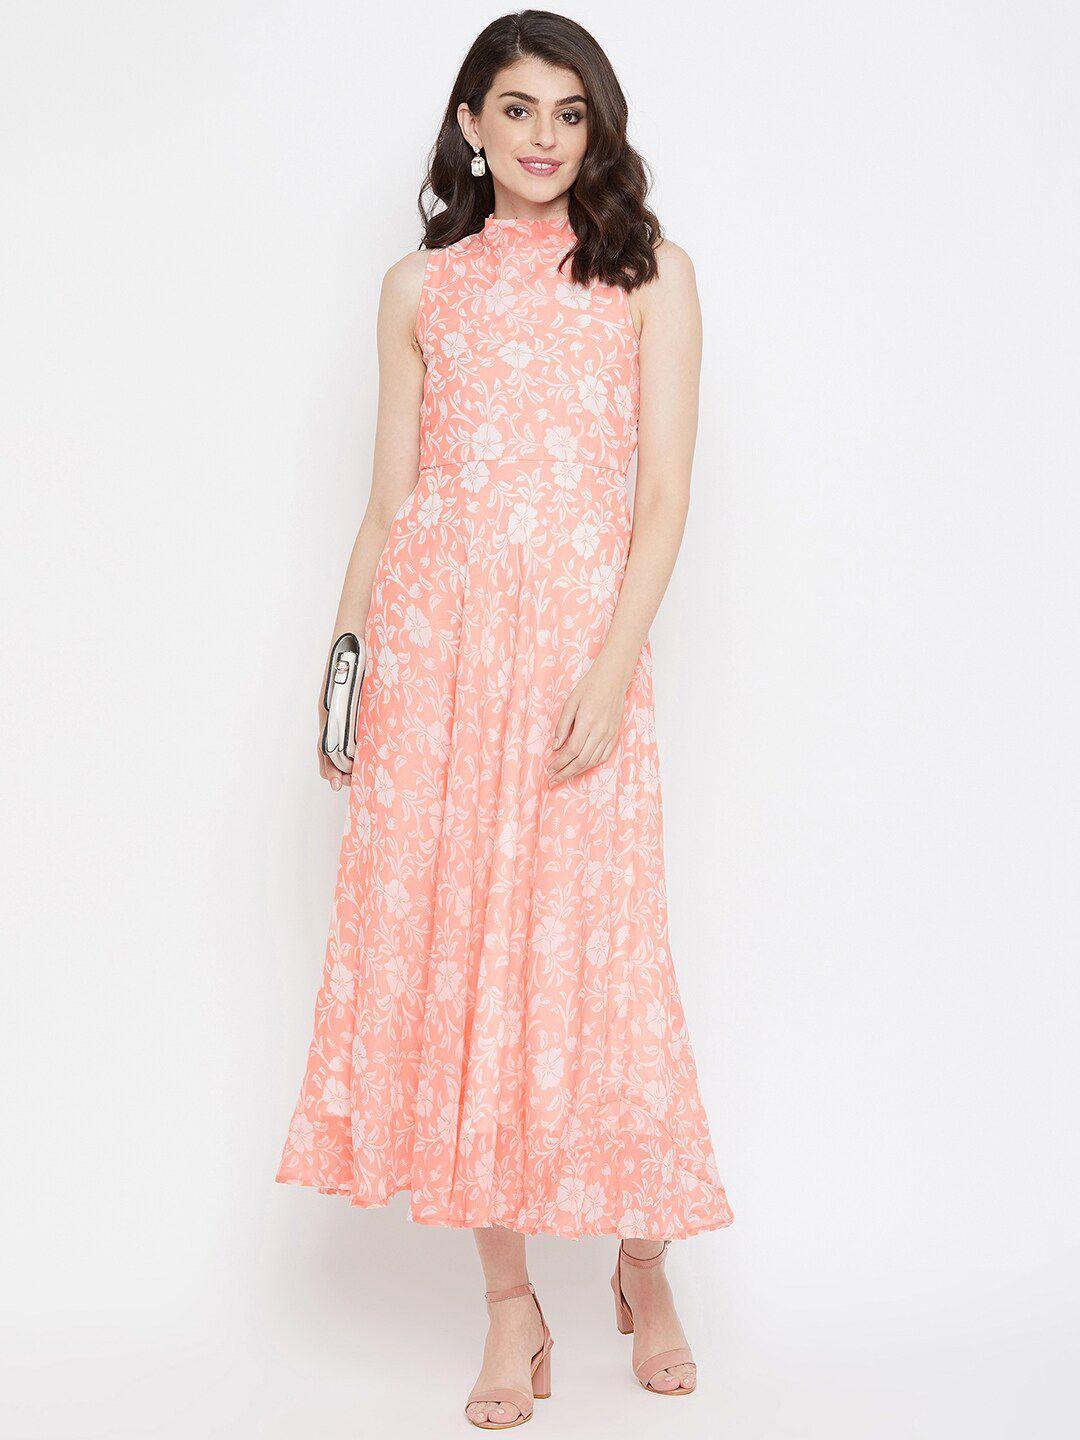 la-zoire-pink-&-white-floral-printed-georgette-maxi-dress